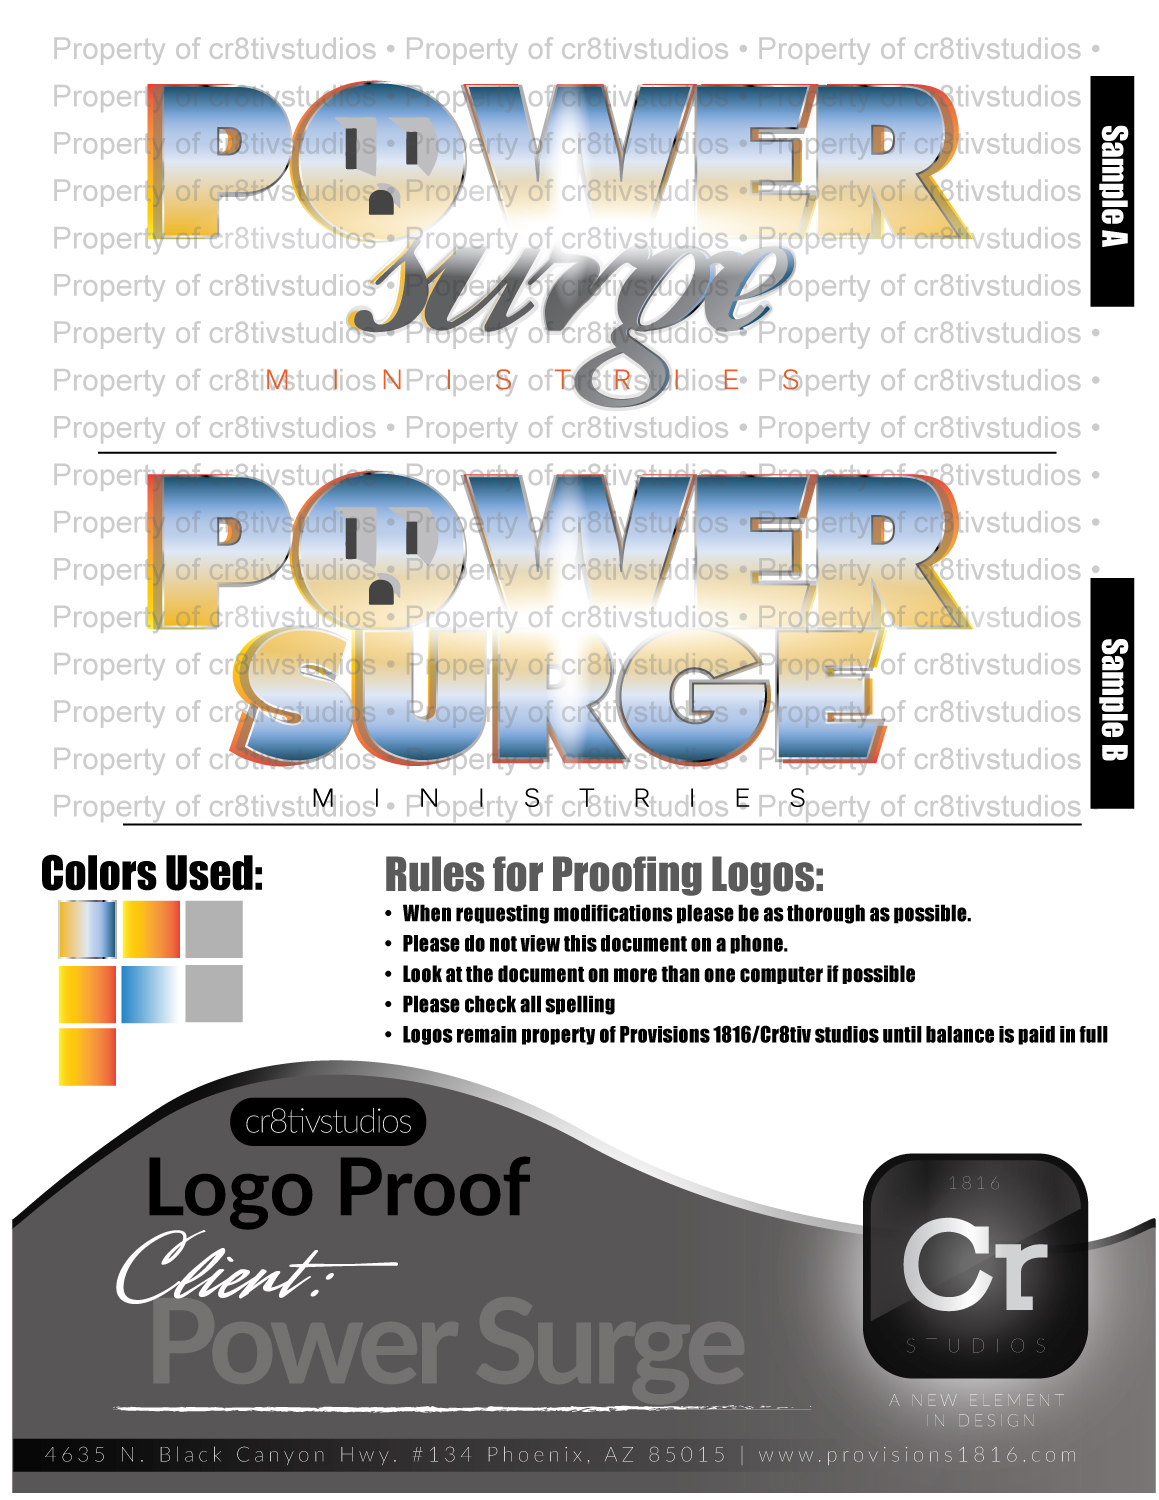 Logo Design Power Surge graphics Provisions 1816 Behance